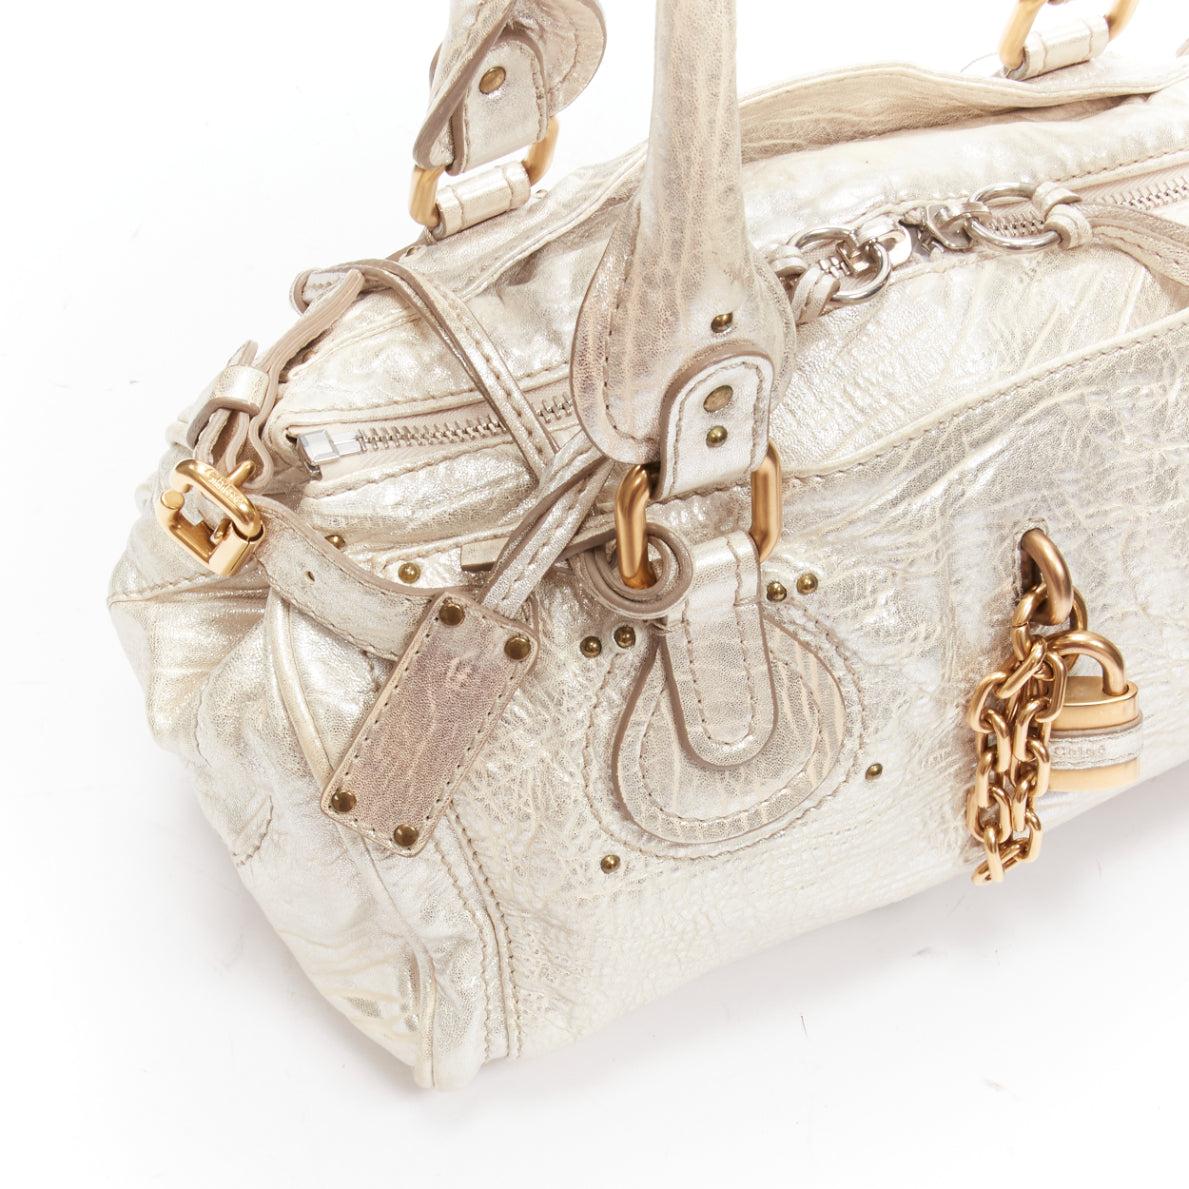 CHLOE Paddington metallic silver leather gold padlock satchel shoulder bag 4